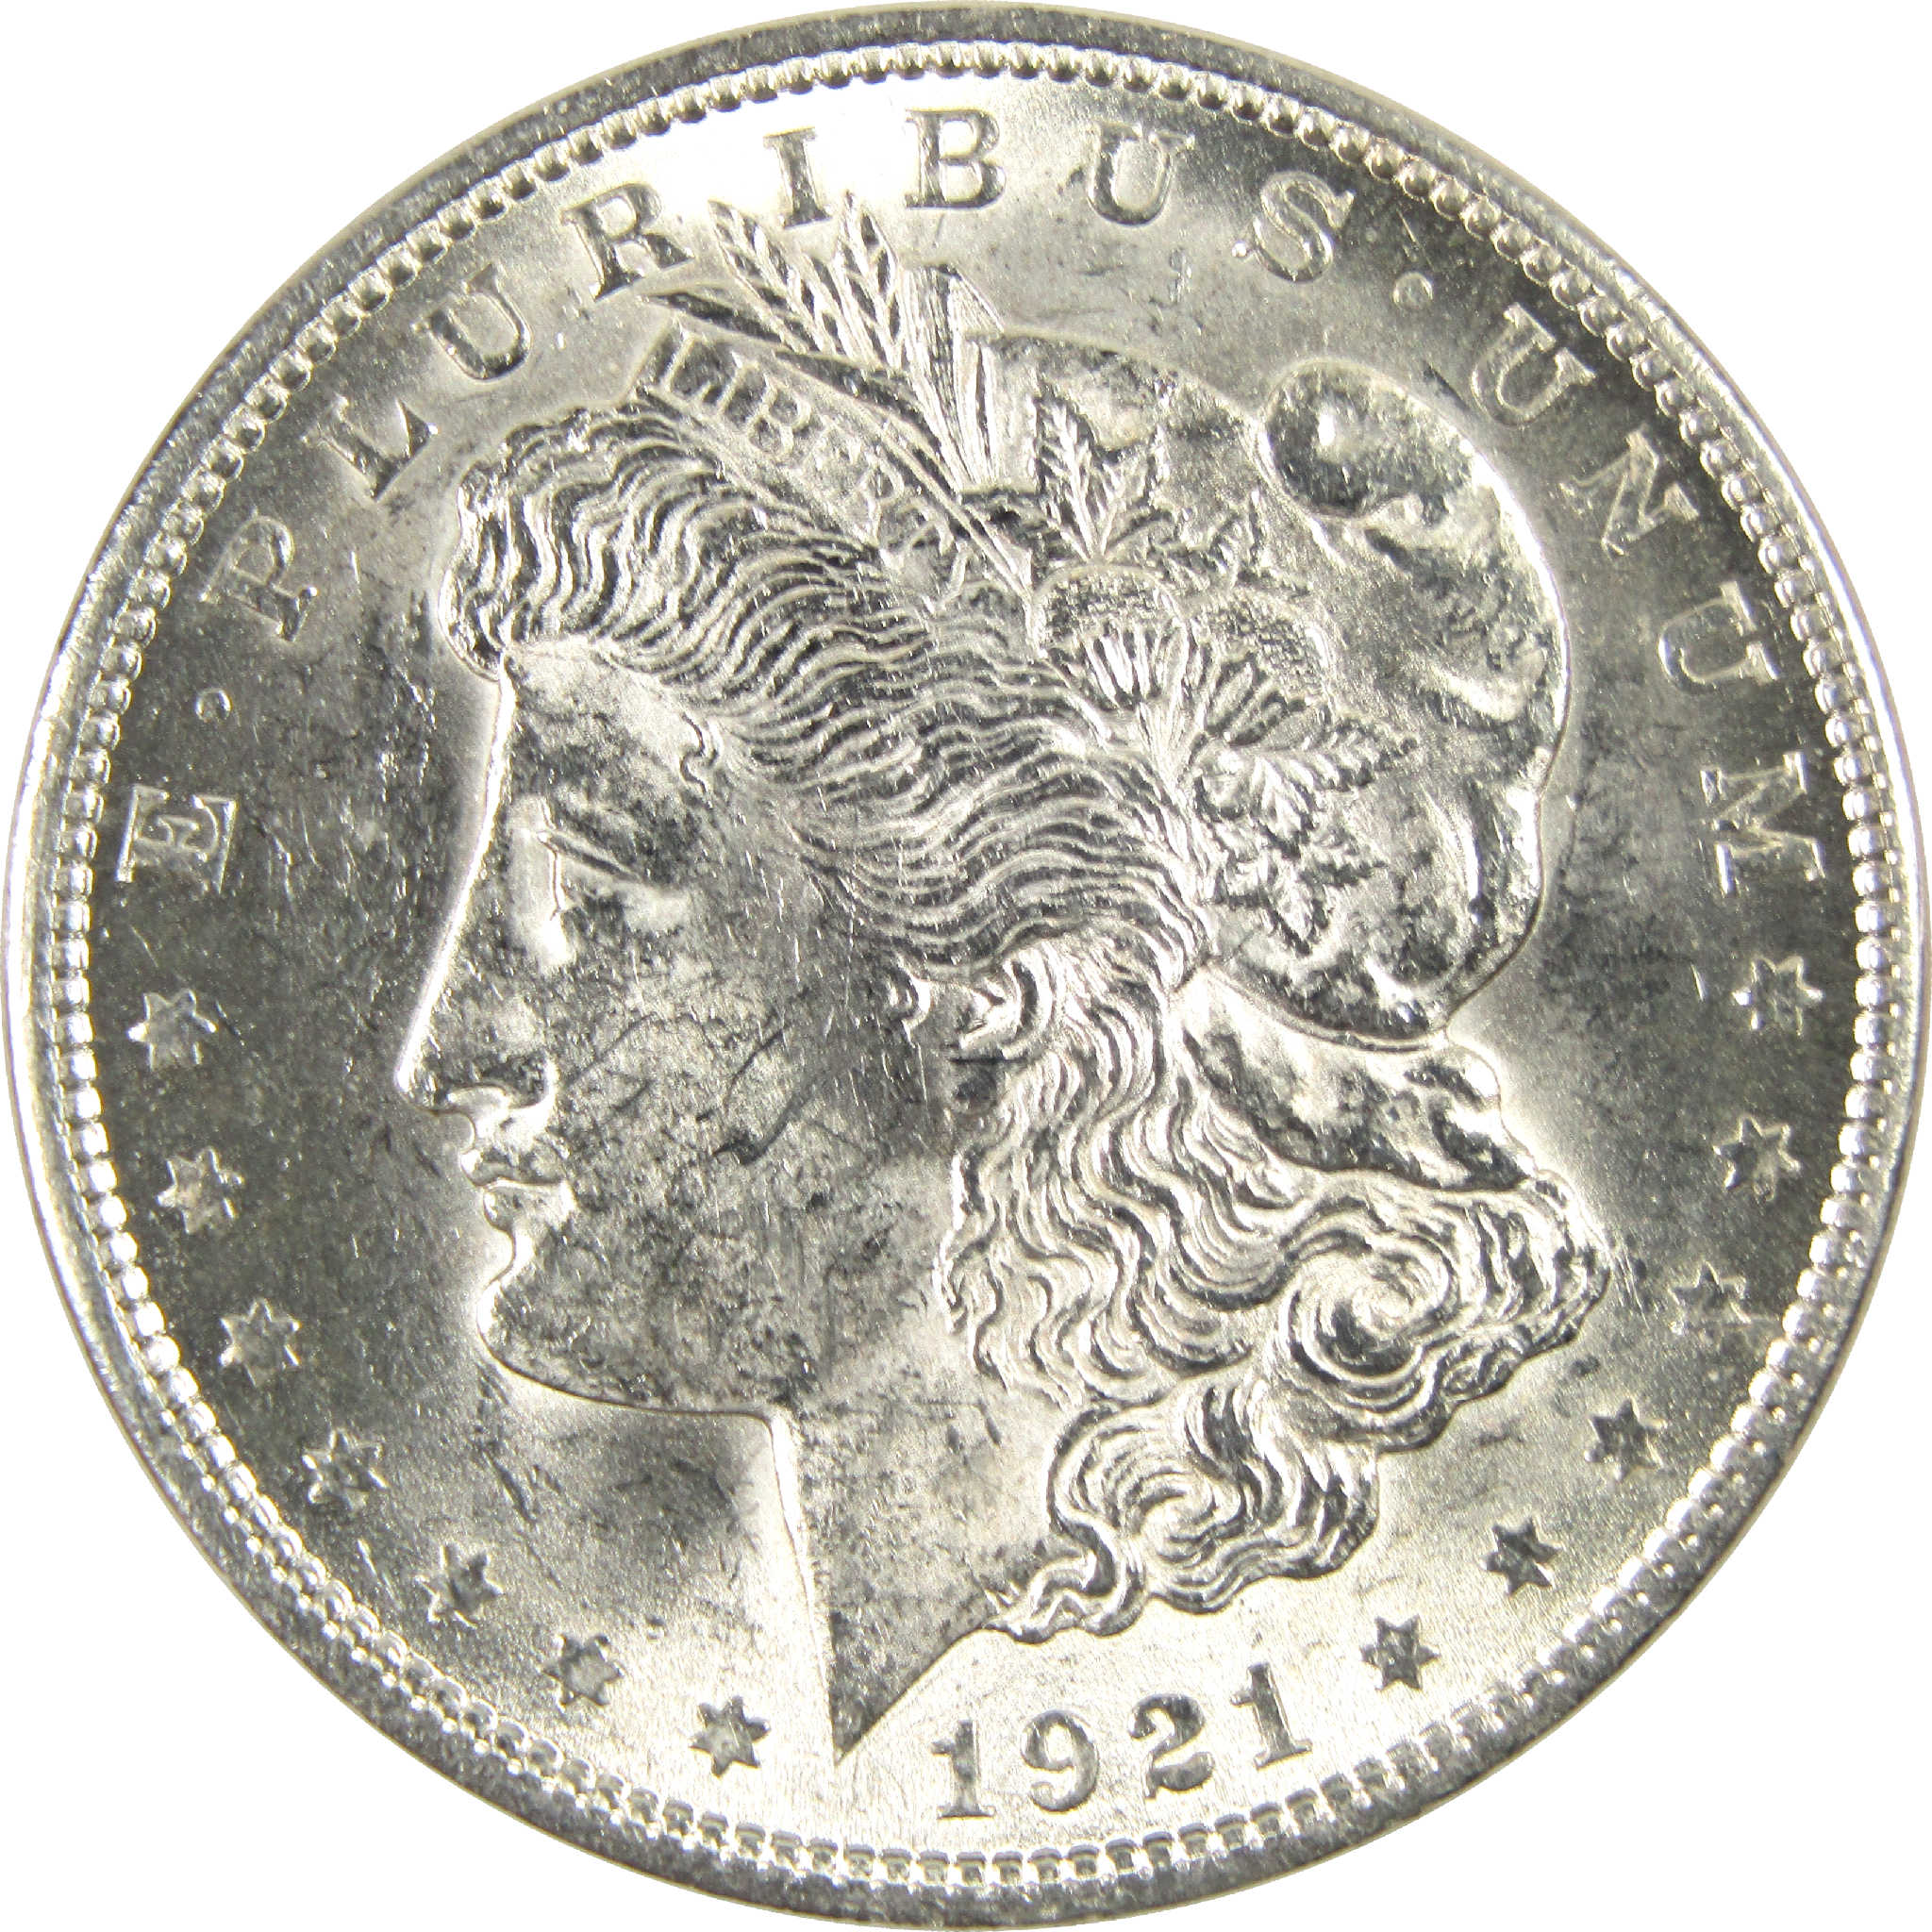 1921 Morgan Dollar CH AU Choice About Uncirculated Silver $1 Coin - Morgan coin - Morgan silver dollar - Morgan silver dollar for sale - Profile Coins &amp; Collectibles